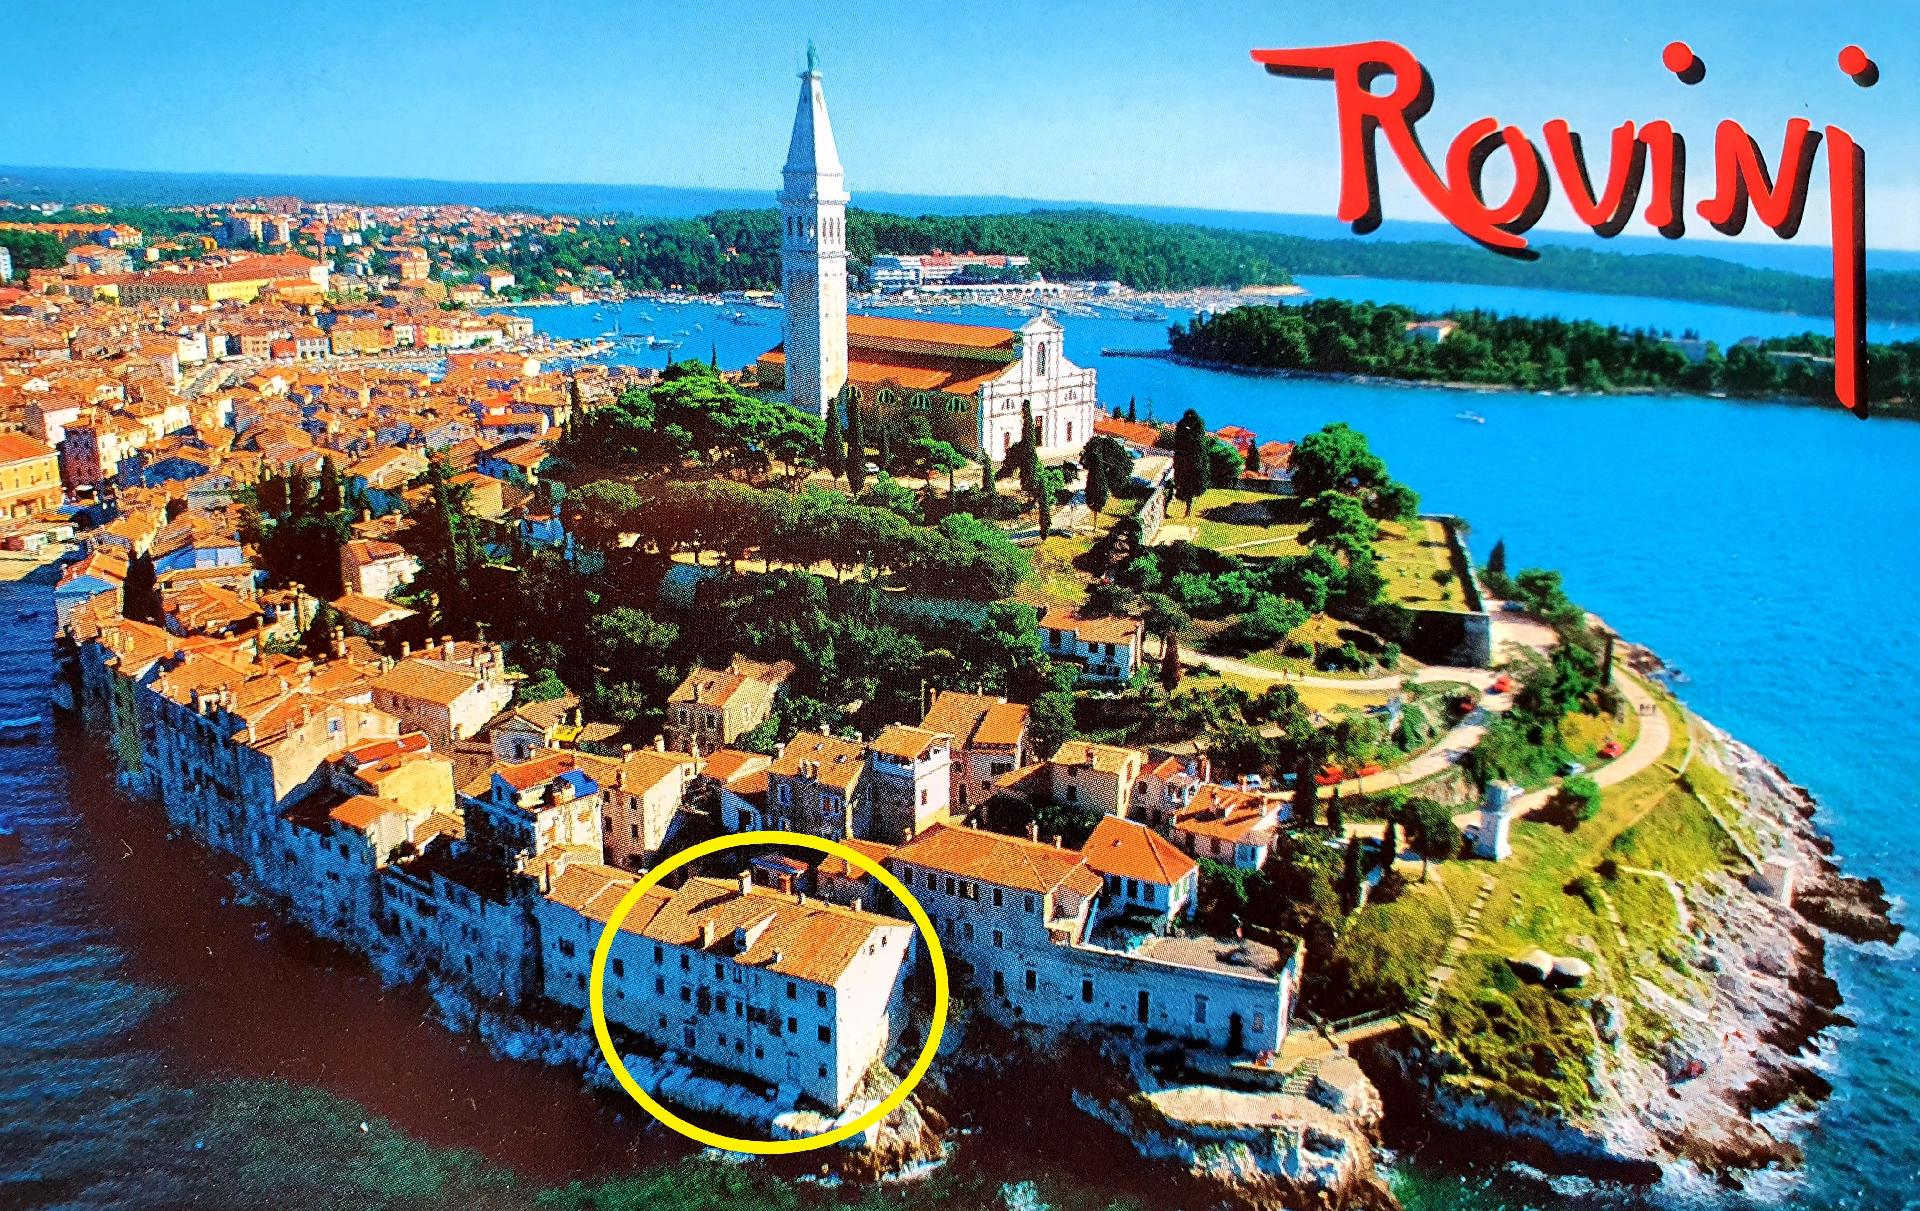 Appartement in Rovinj und Meerblick  in Istrien